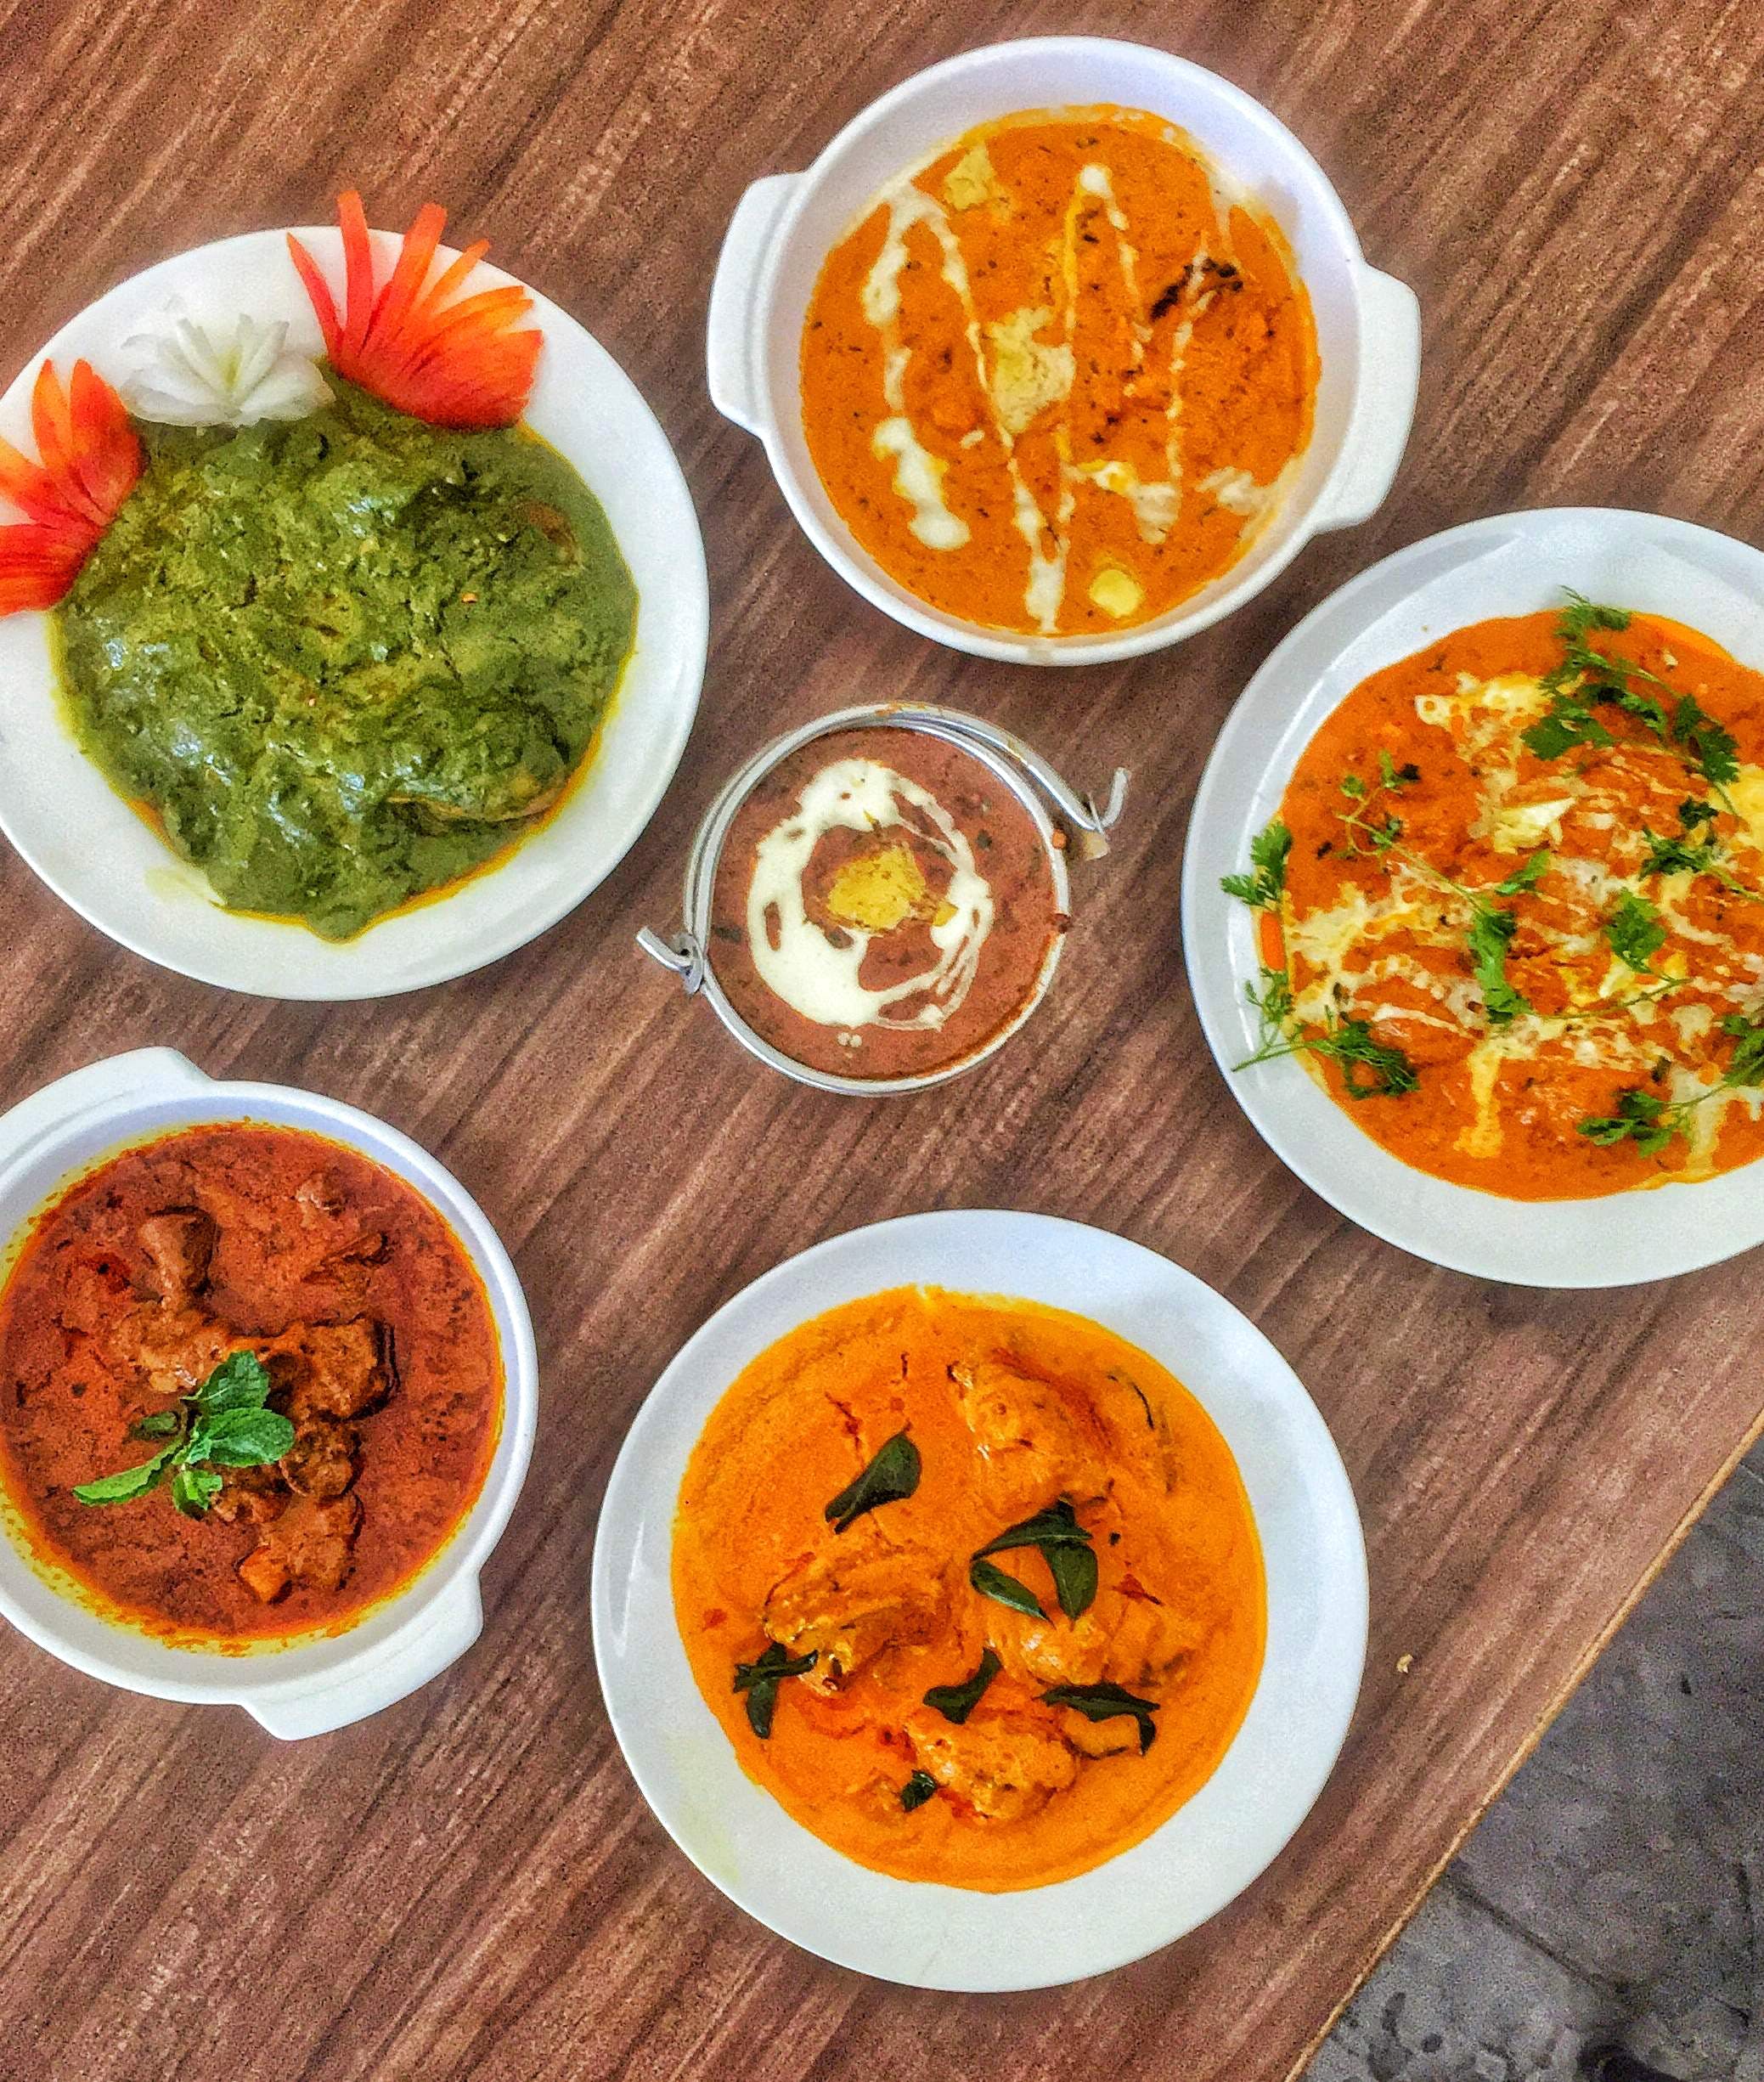 Dish,Food,Cuisine,Ingredient,Produce,Curry,Meal,Vegetarian food,Indian cuisine,Jalfrezi